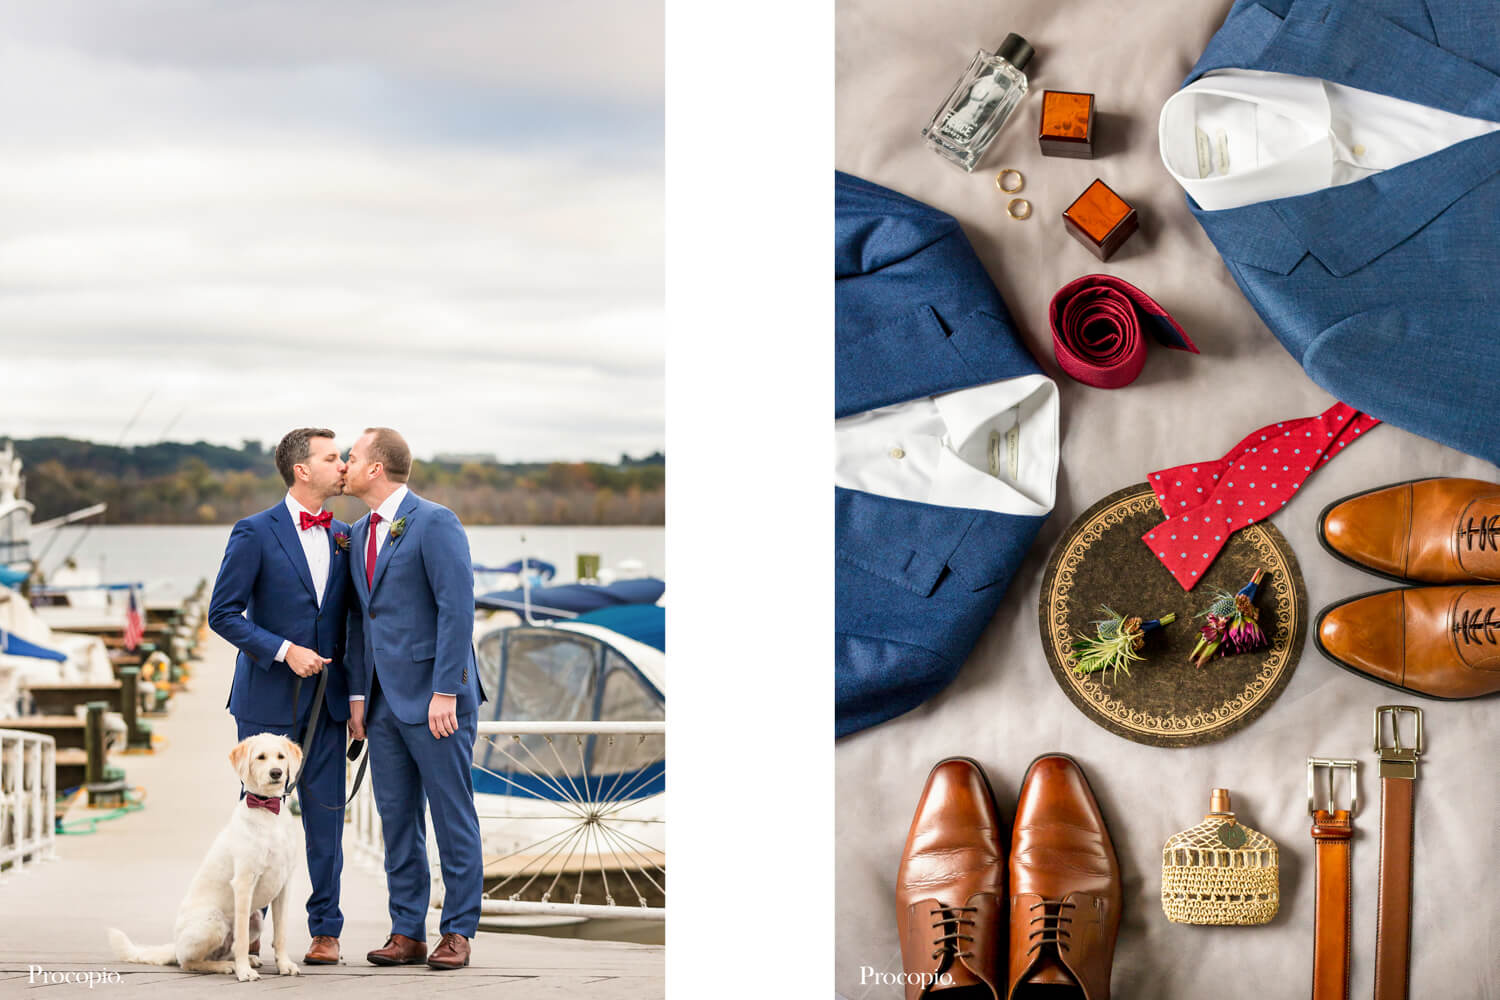 Blue and red men's wedding attire - Bellwether Events - best Washington DC wedding planner - photo by Procopio Photography